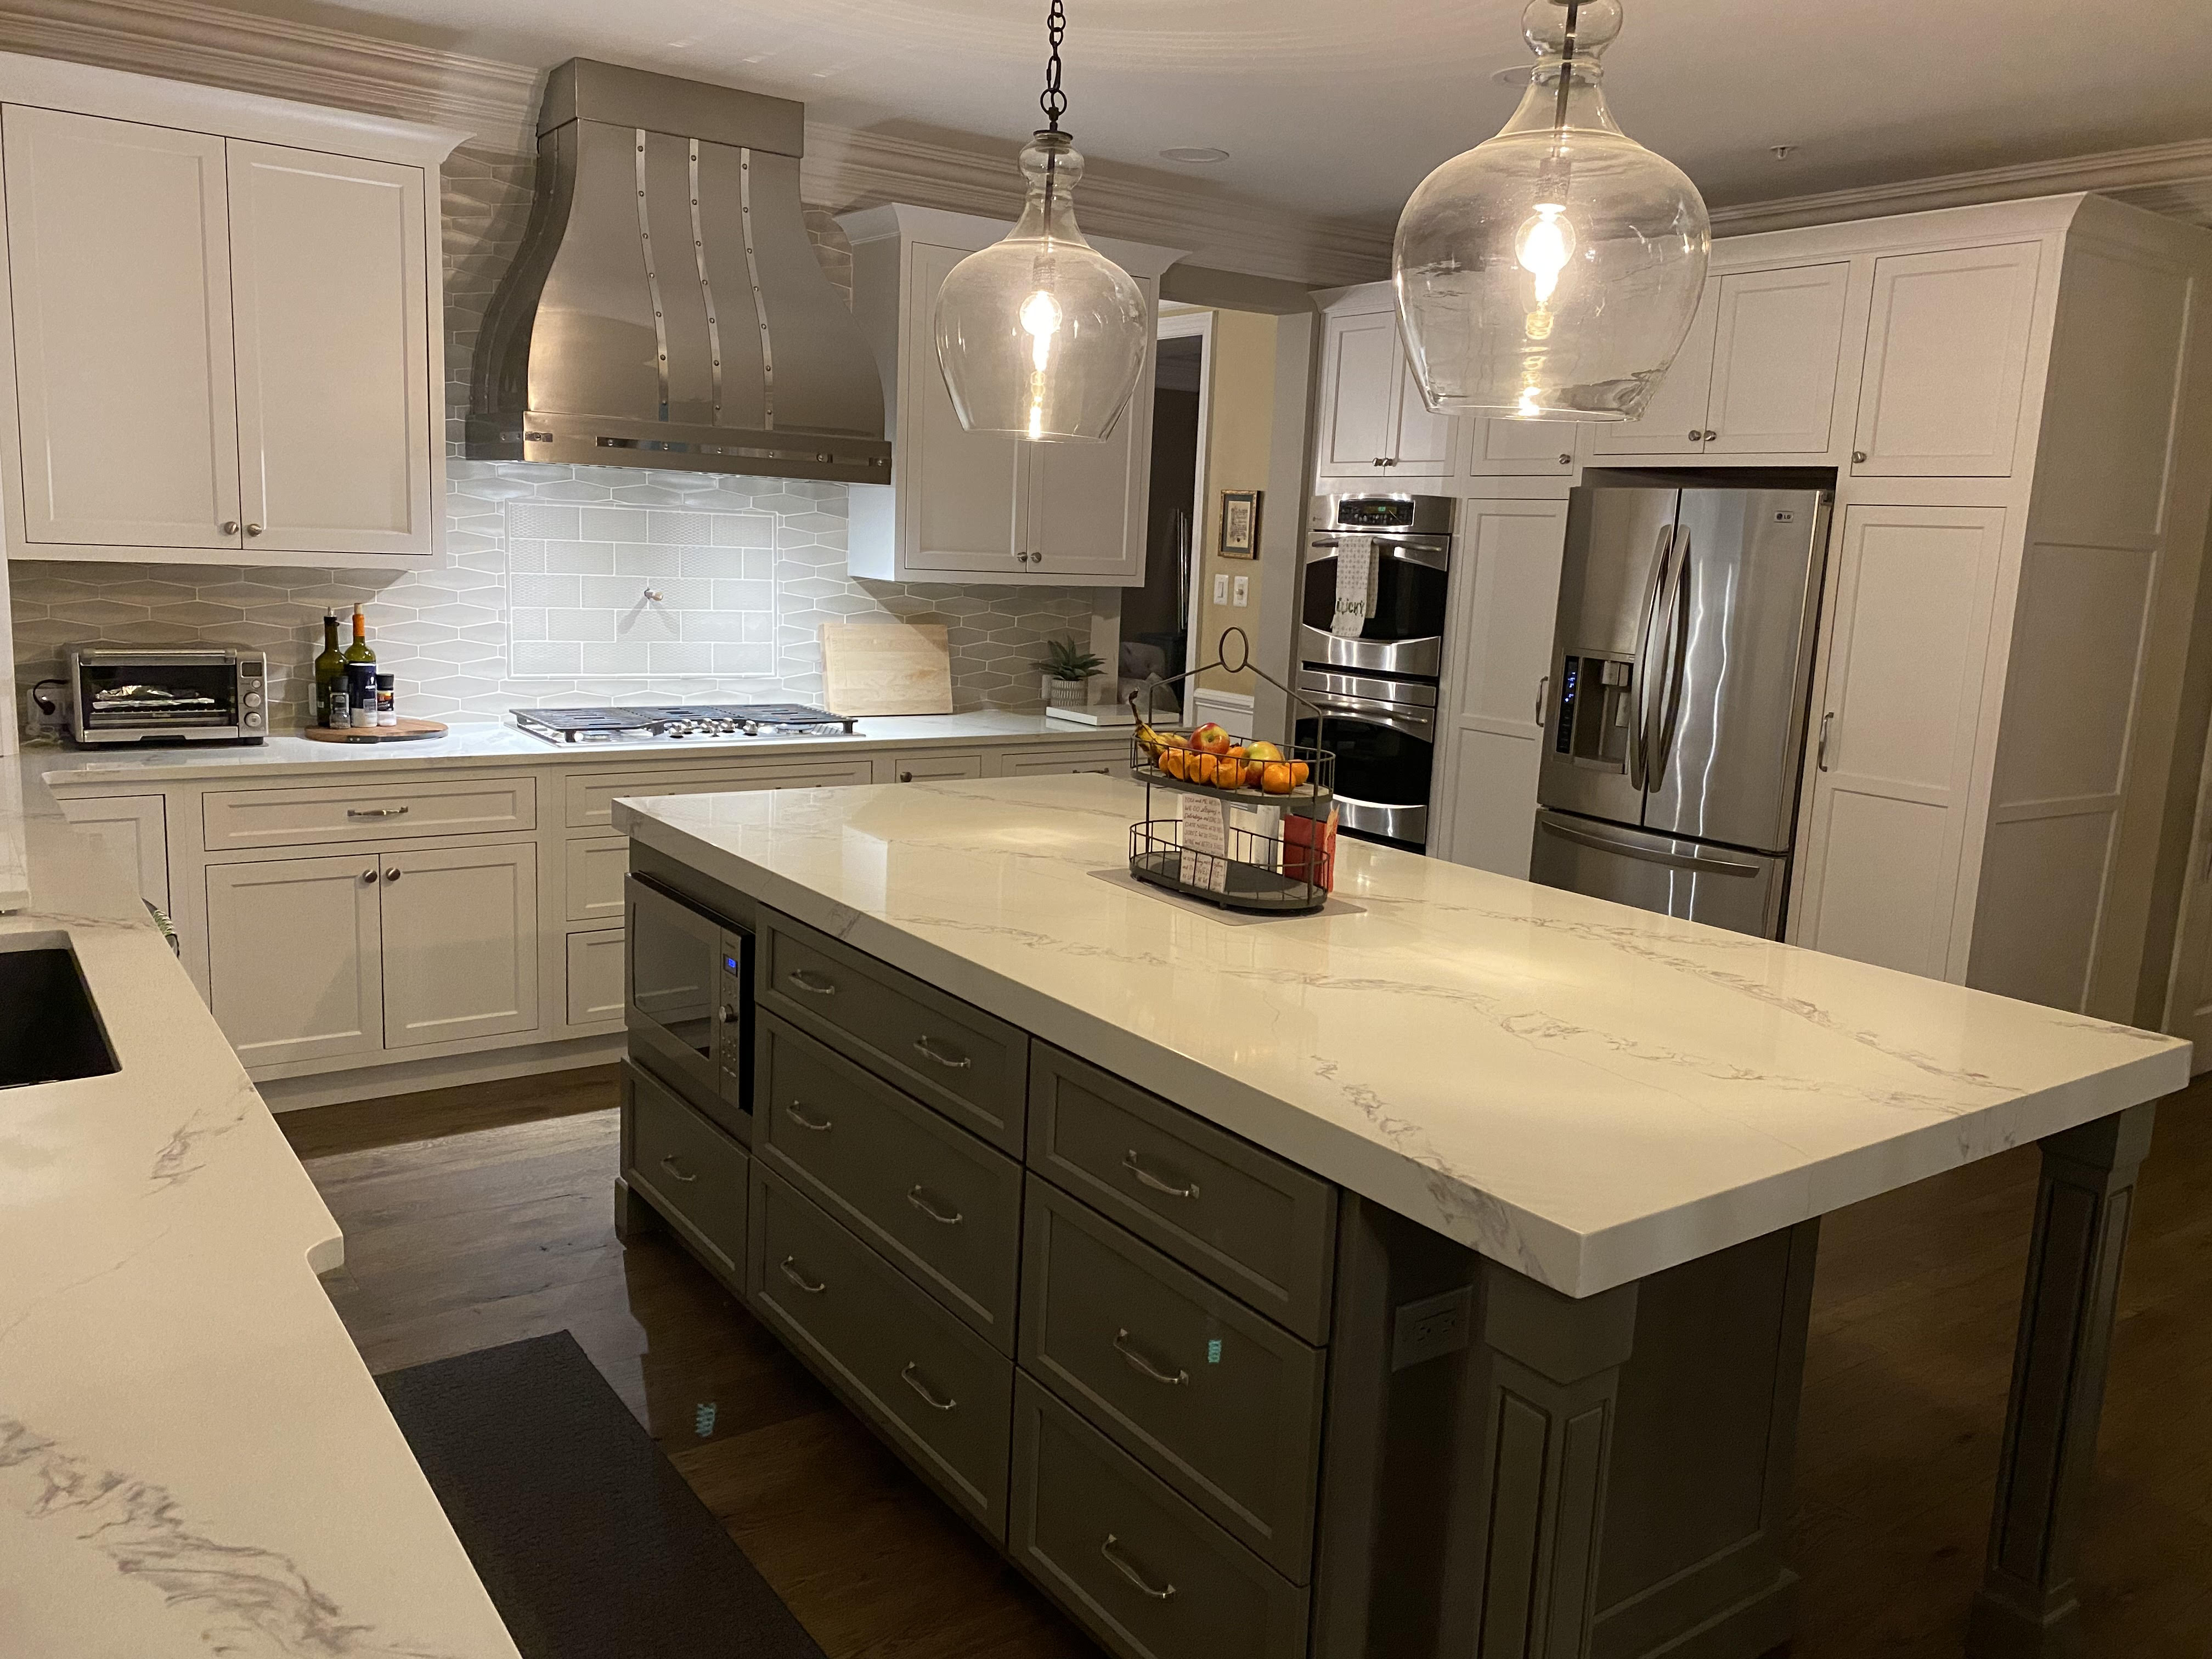 Charming kitchen design idea creative kitchen table idea, white kitchen cabinets, marble kitchen countertops, marble backsplash